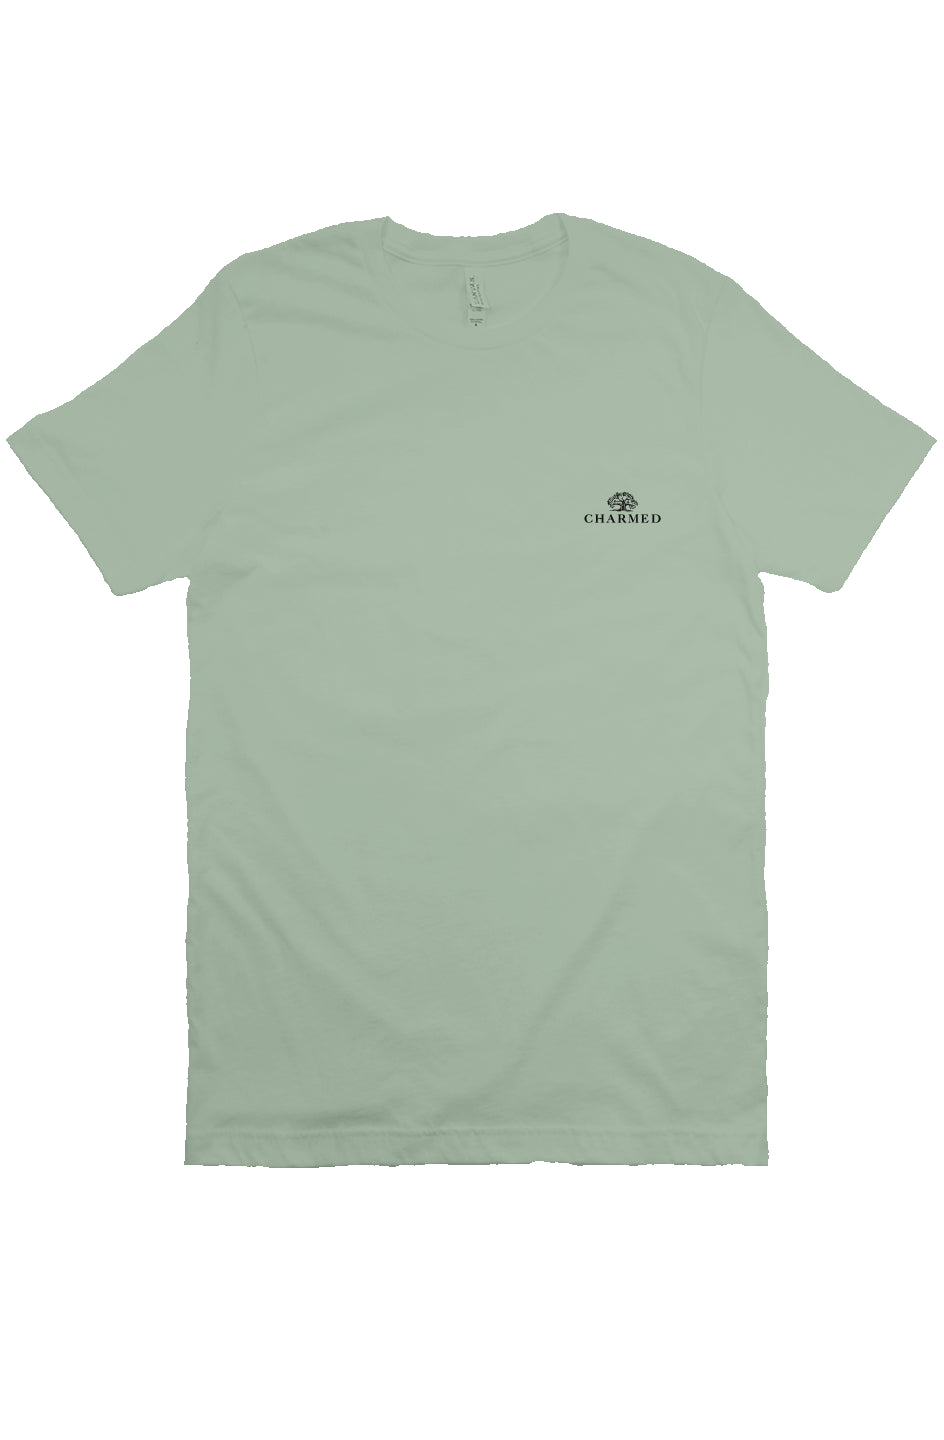 Peter Pan Unisex Adult T-shirt sage